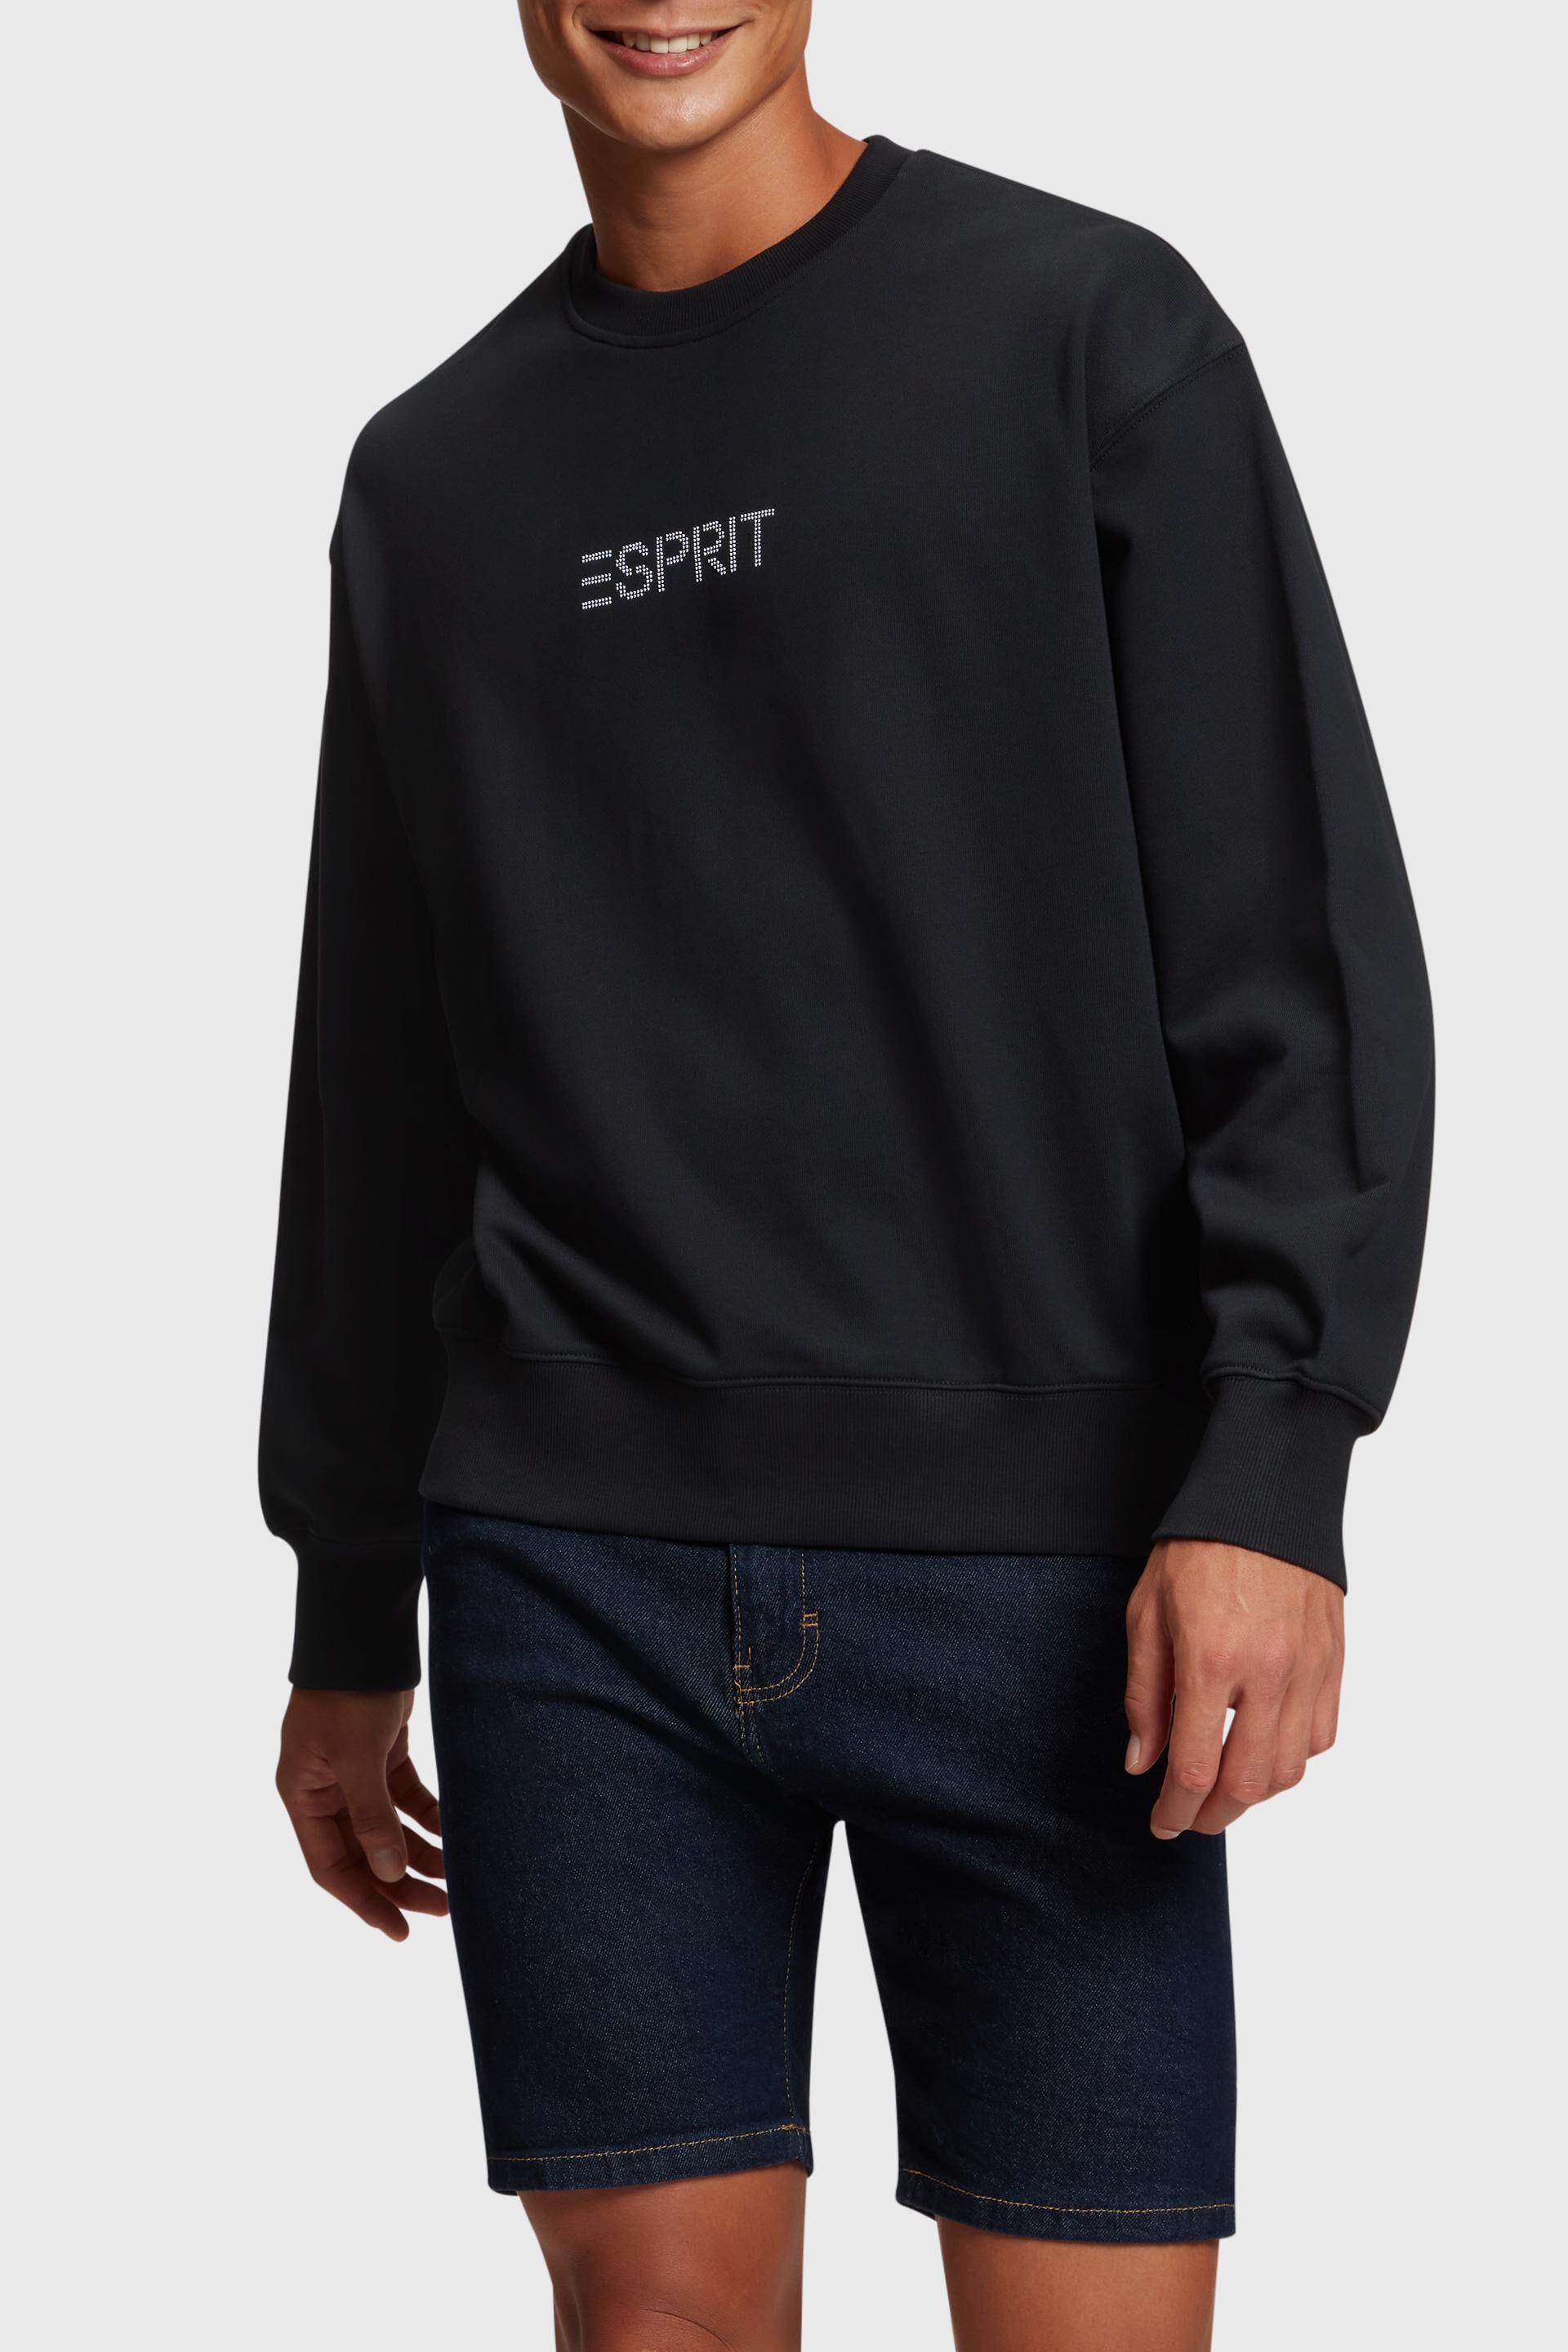 Esprit sweatshirt Stud applique logo